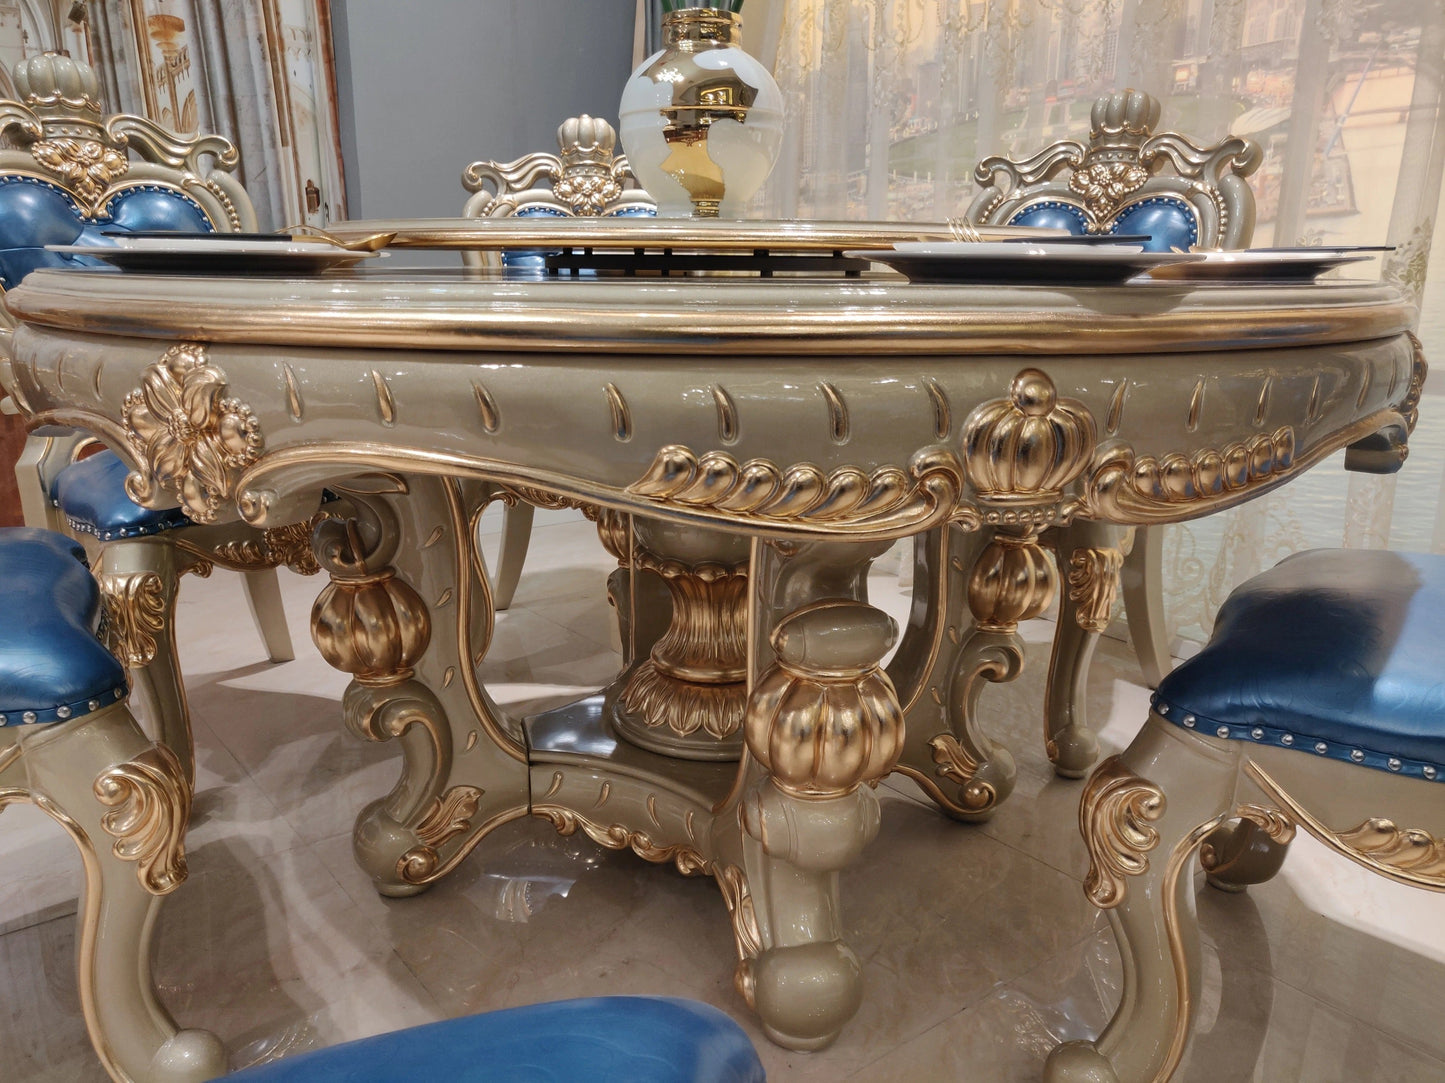 Barock Style Dining Table Set Golden Foil Hand Carved Italian Design Dining Room Furniture